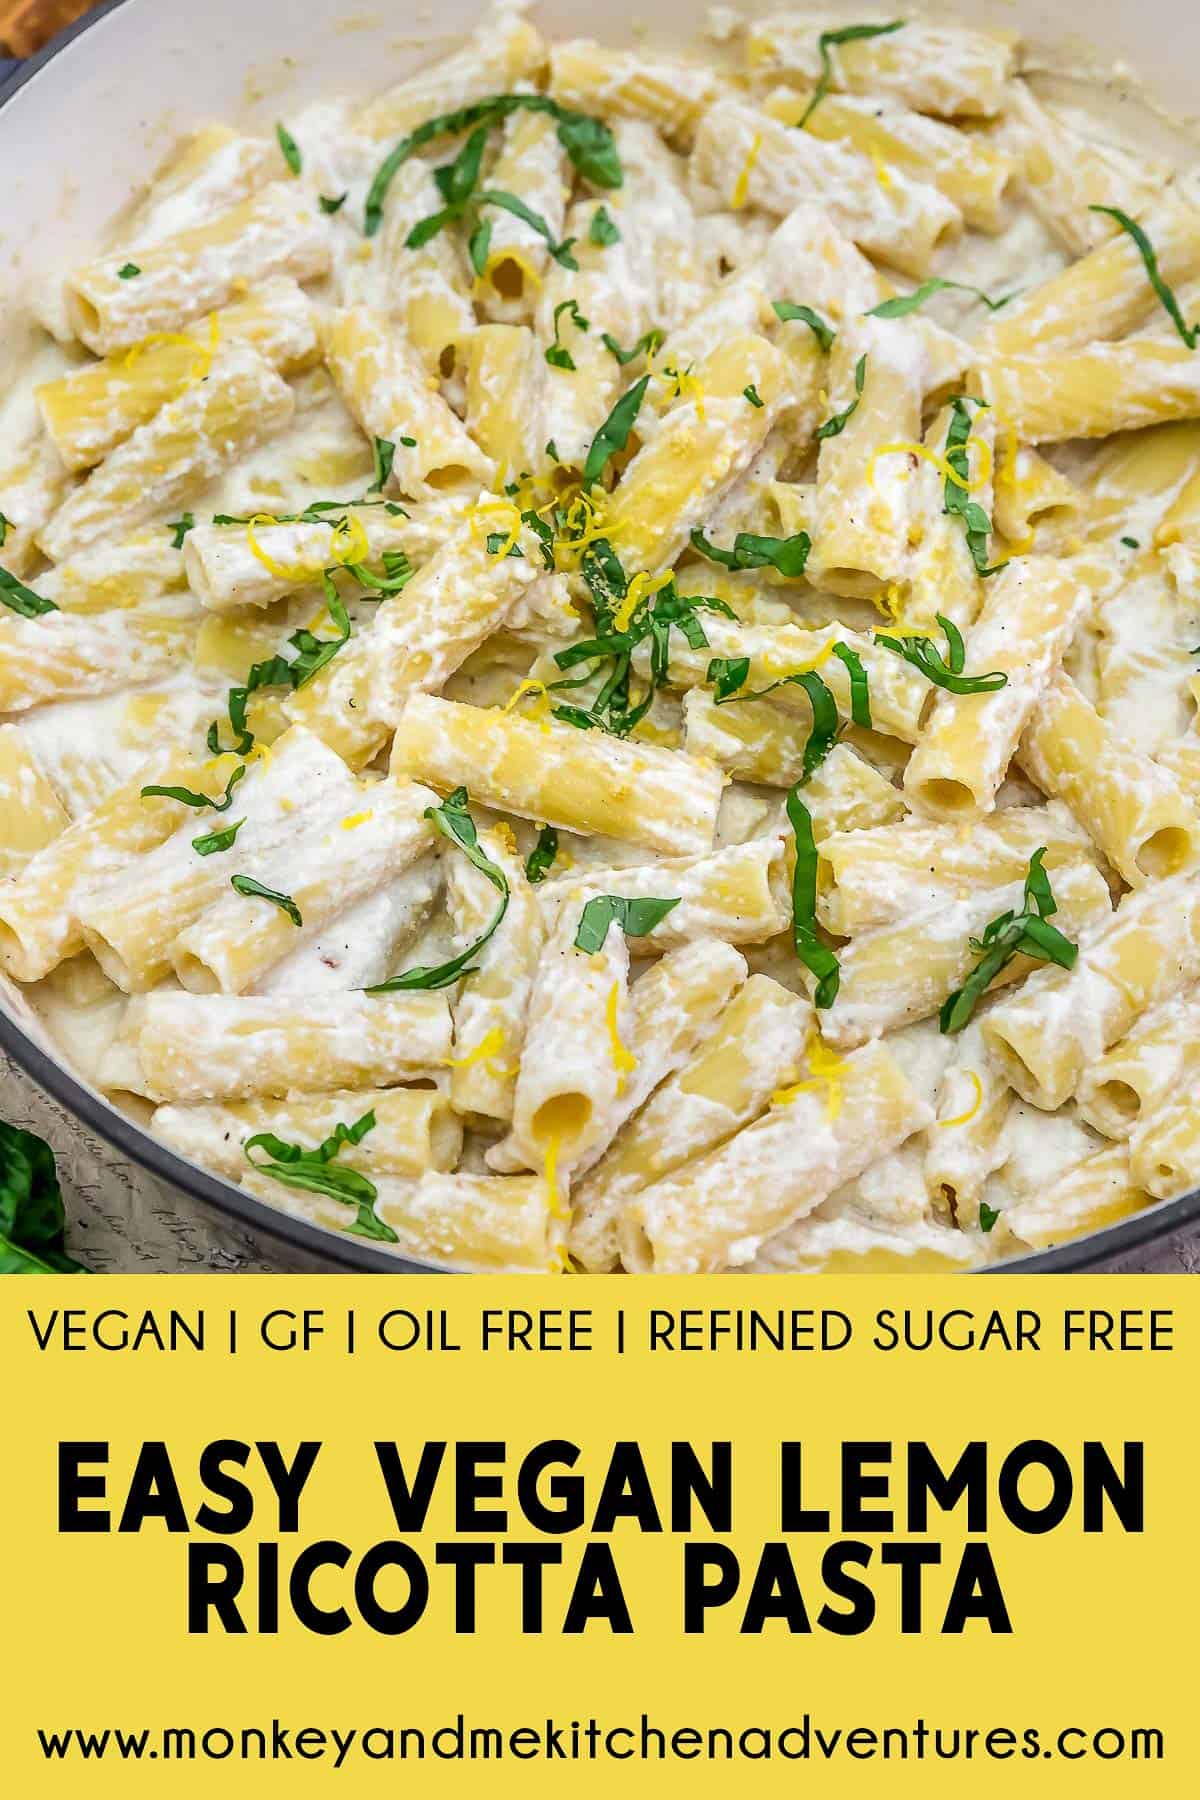 Easy Vegan Lemon Ricotta Pasta with text description